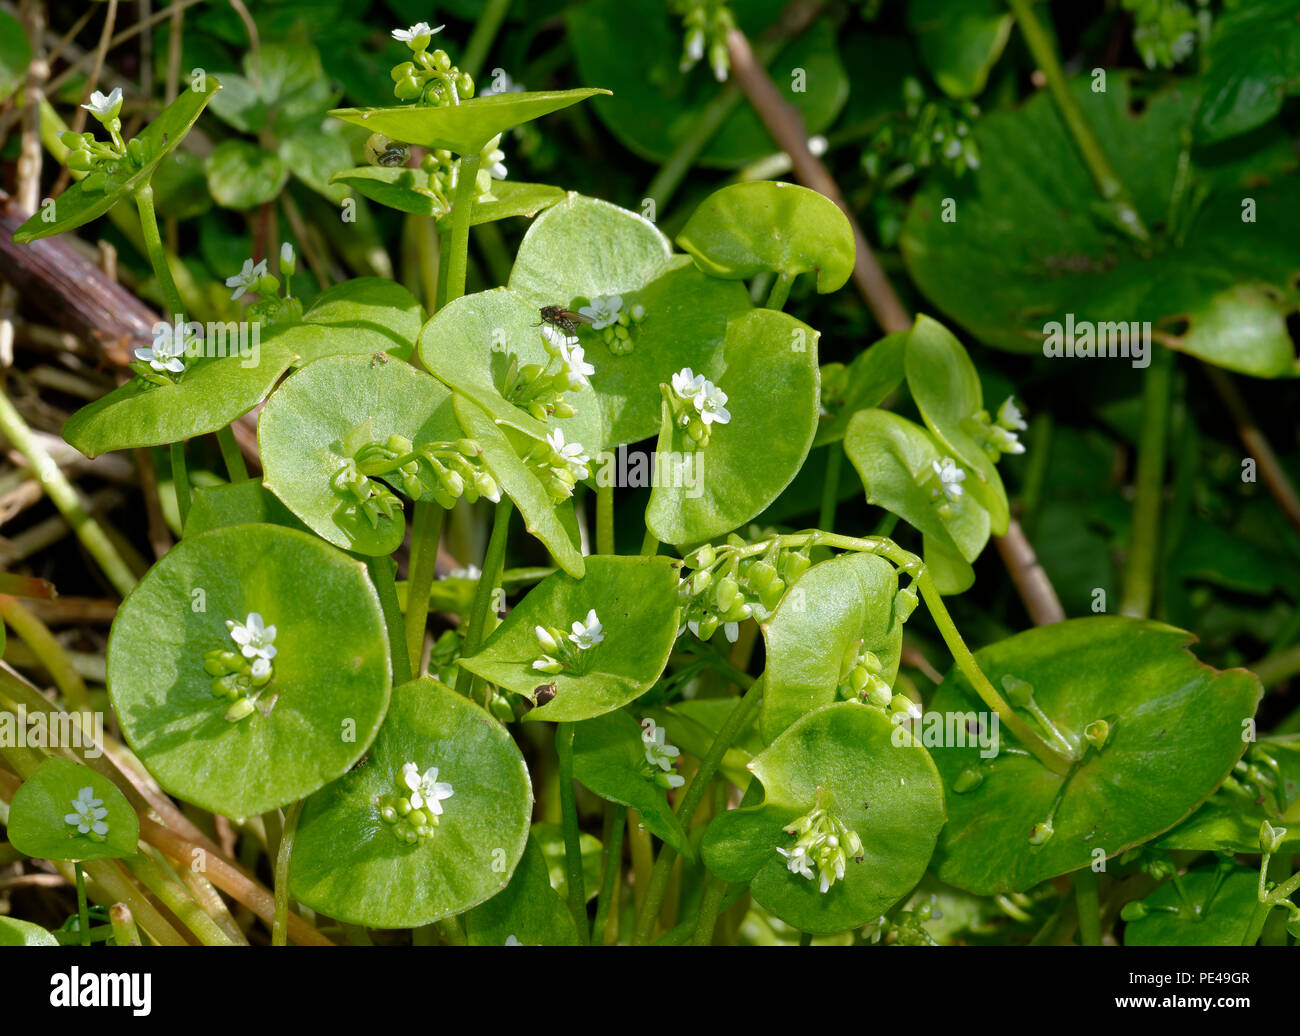 Spring Beauty or Indian Lettuce - Claytonia perfoliata Stock Photo